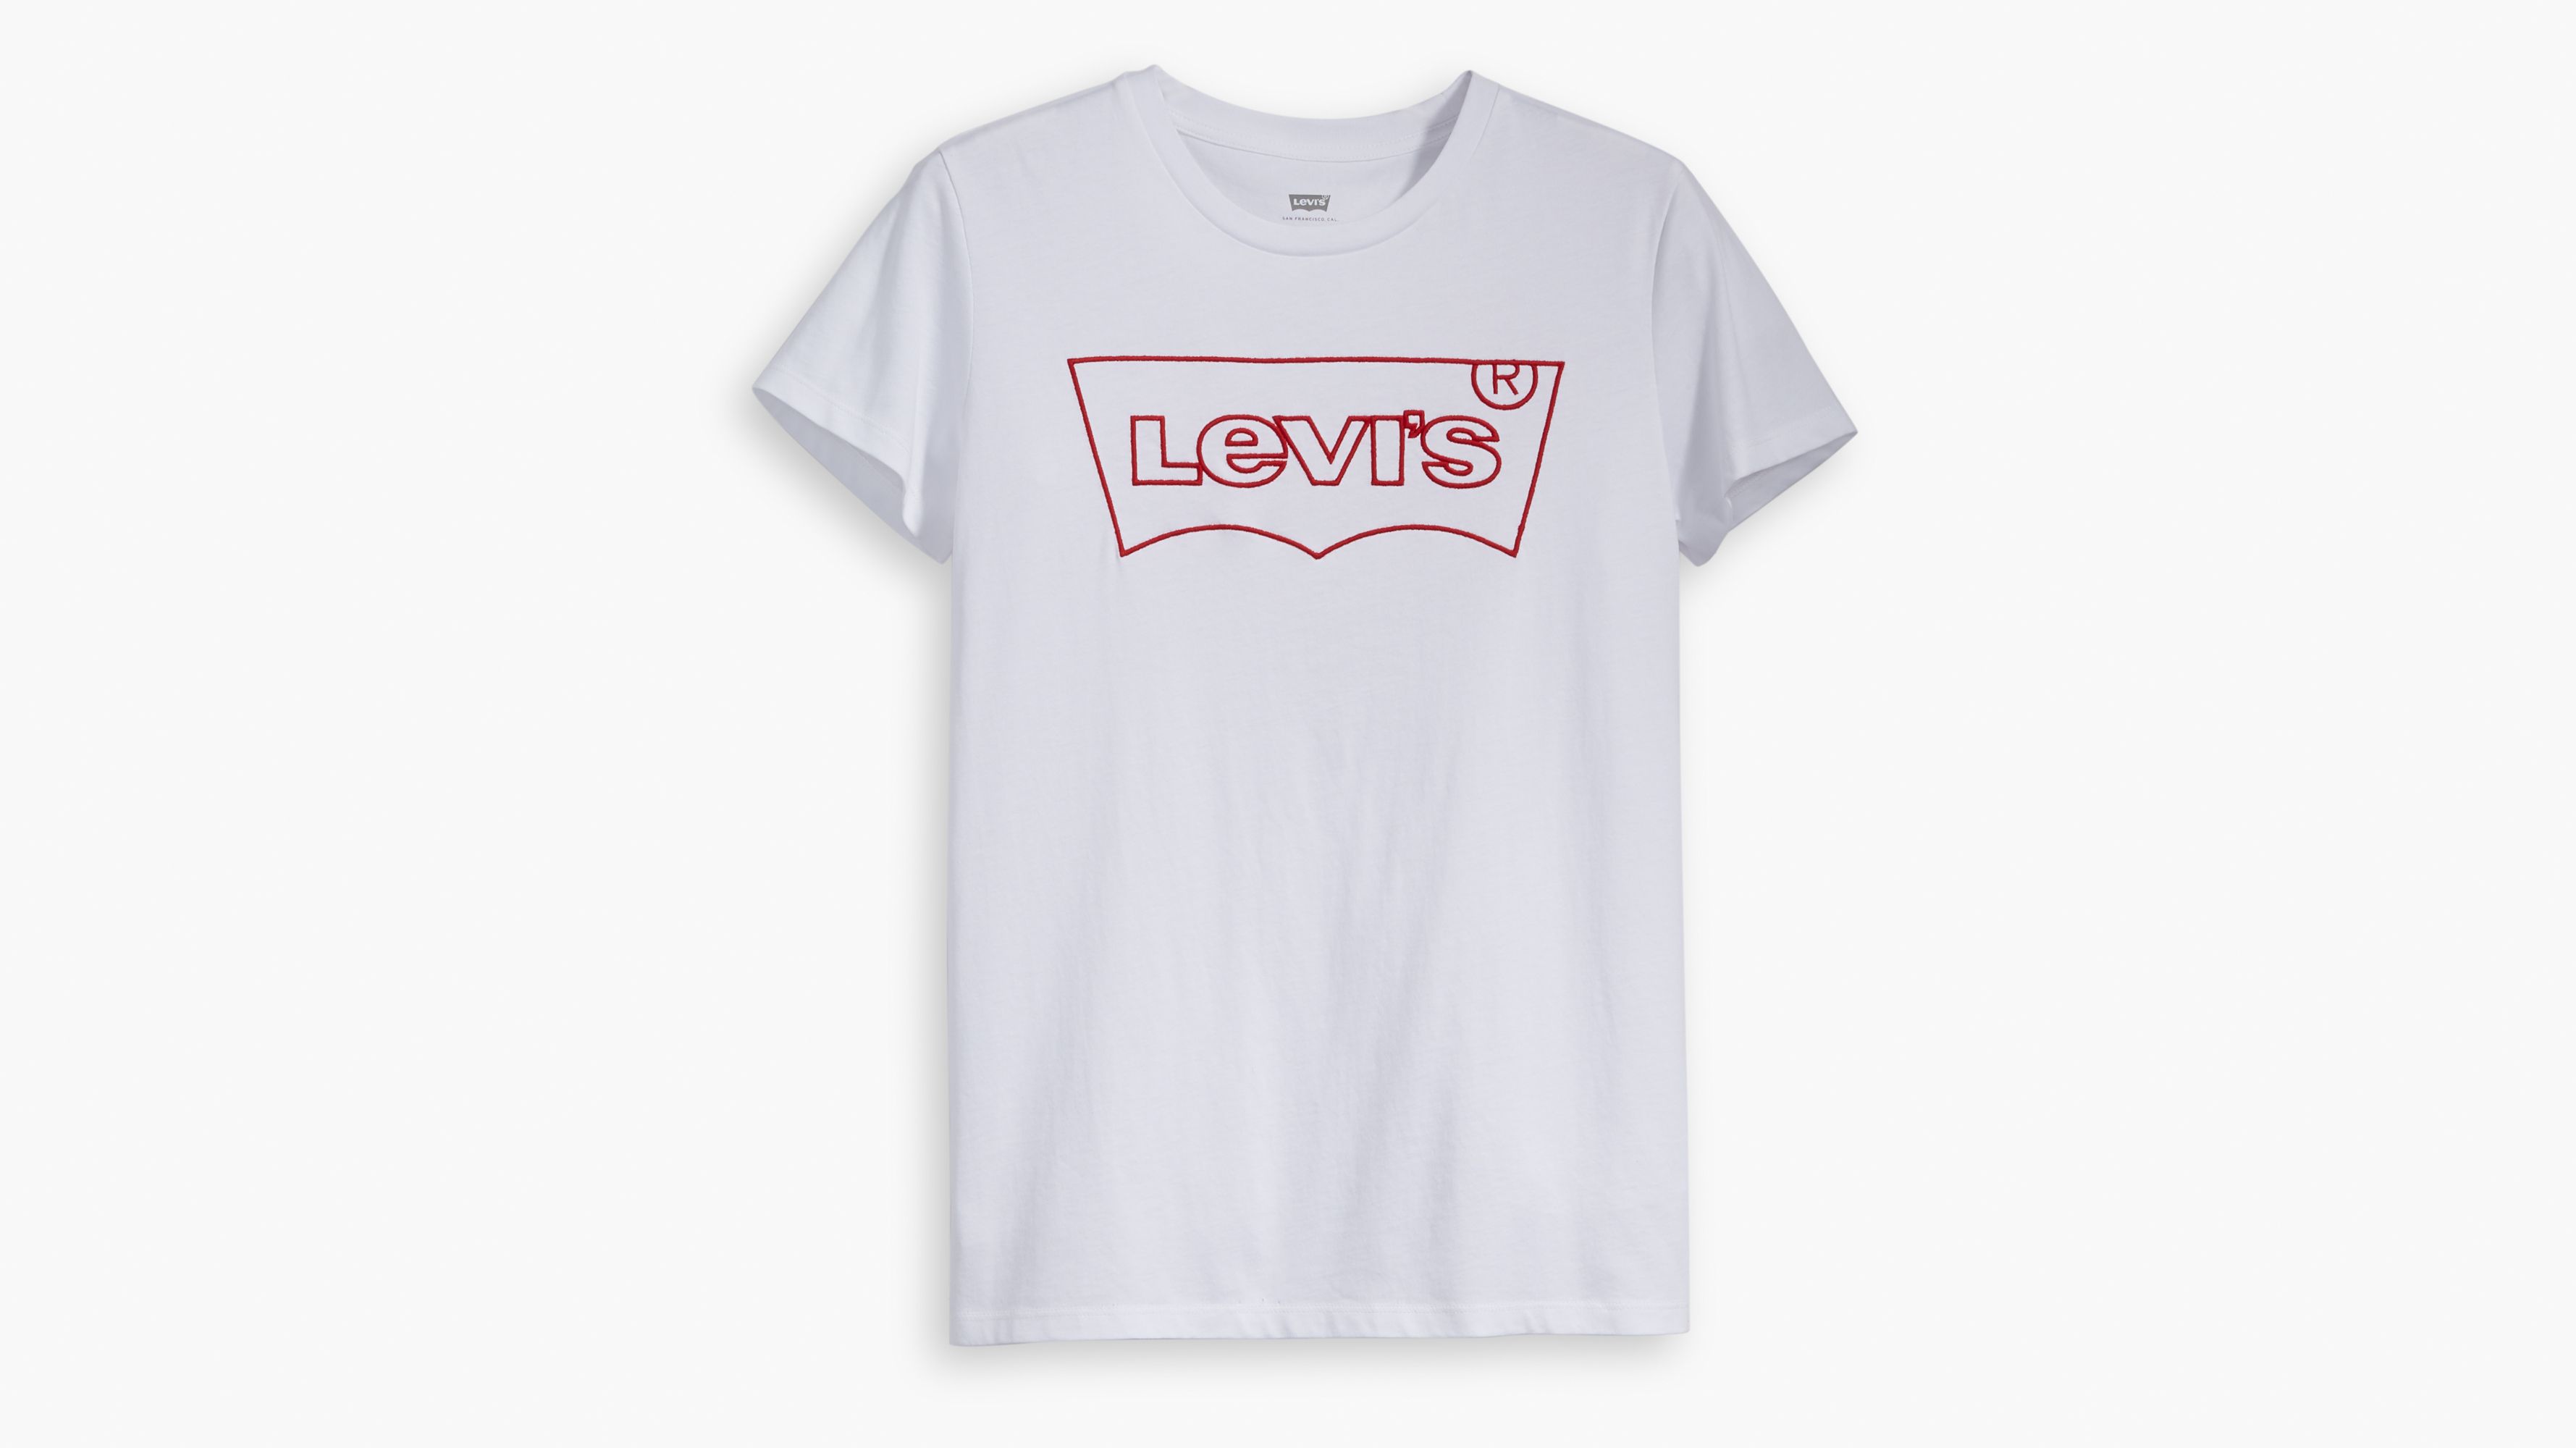 levis white t shirt for women